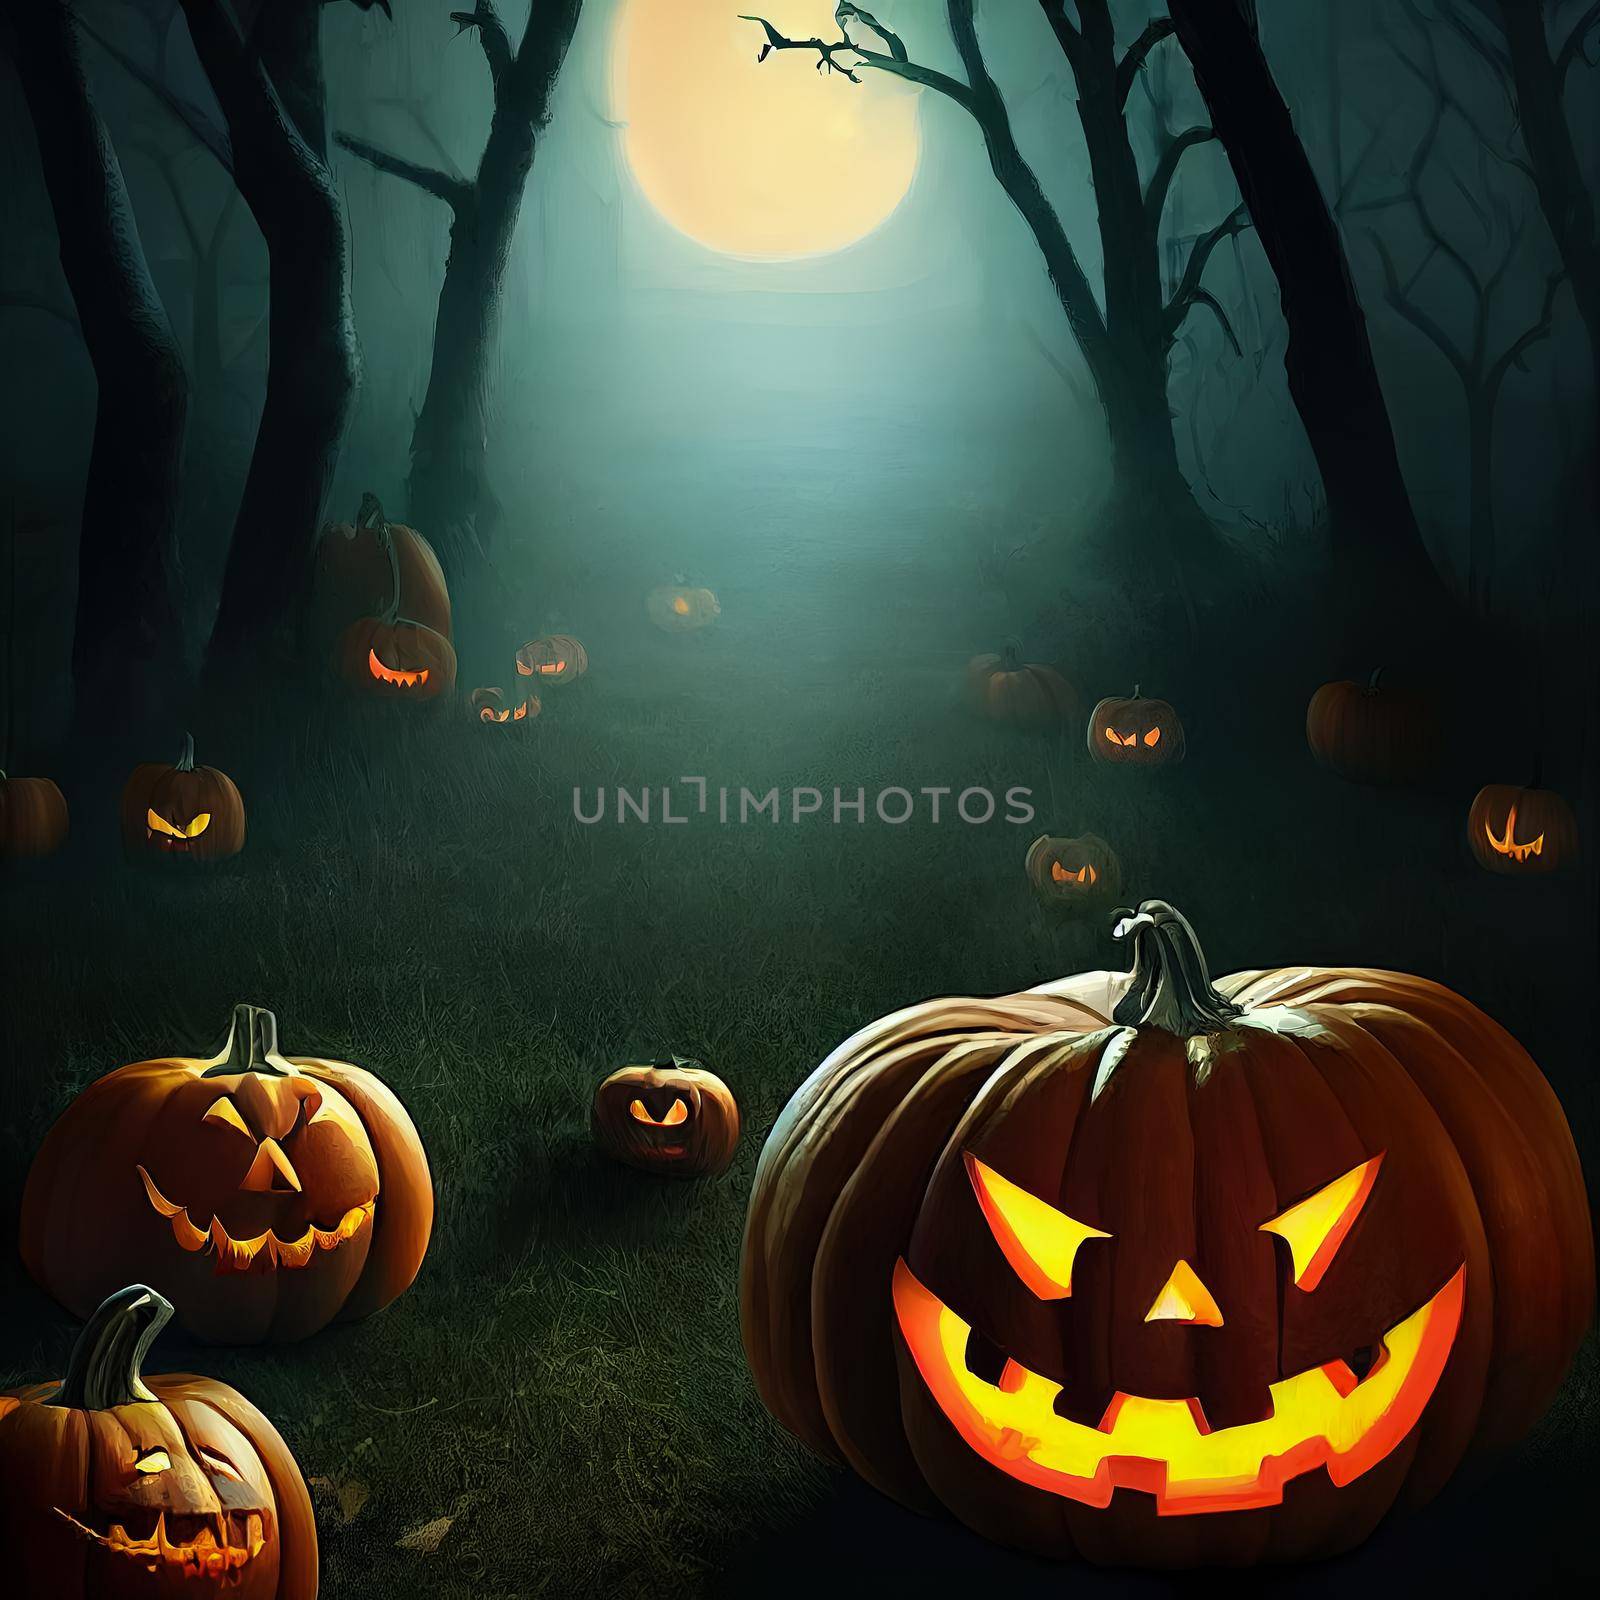 Halloween evil pumpkin in the forest, cartoon illustration of a evil pumpkin face. by JpRamos